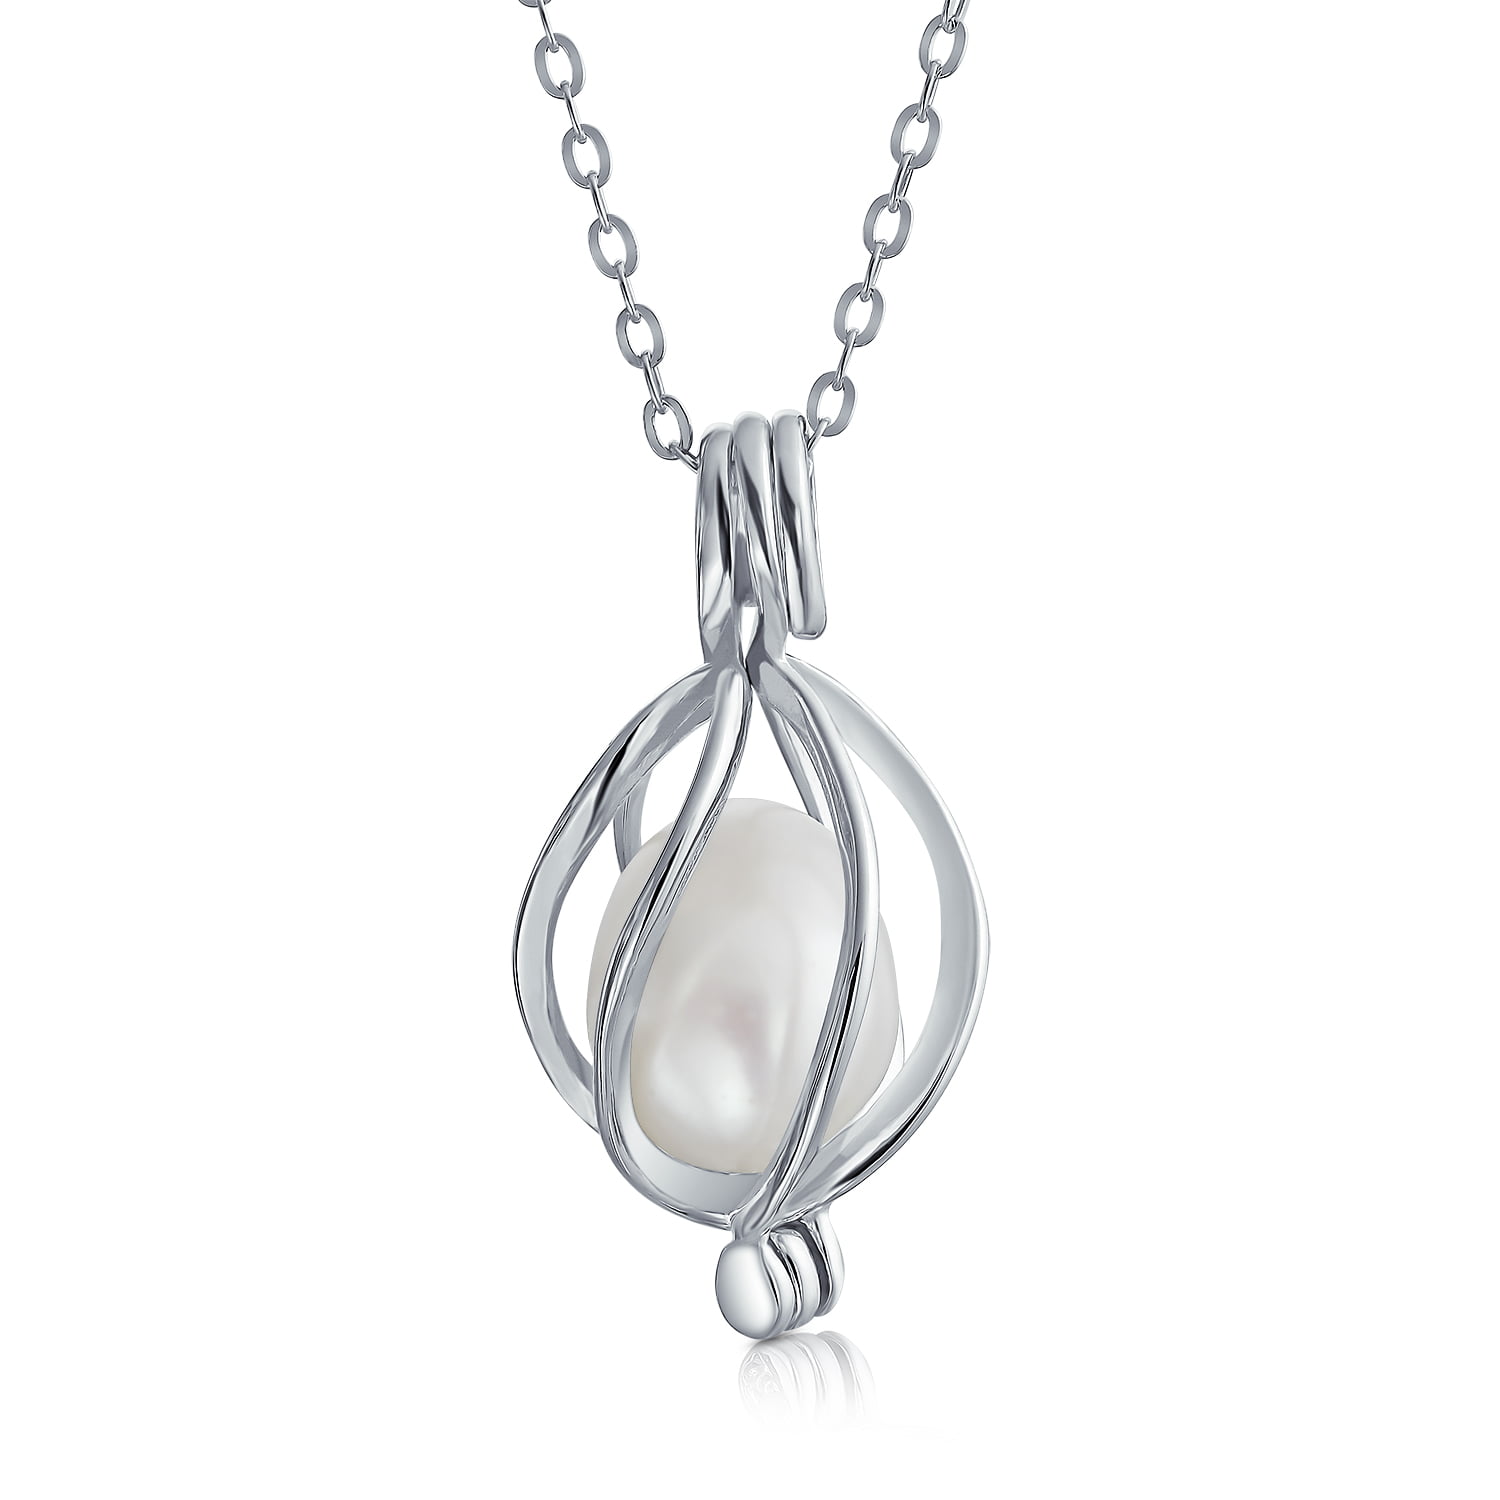 Aooaz Womens Ladies Silver Pendant Necklace Hollow Teardrop Design Clear Cubic Zirconia Wedding Promise